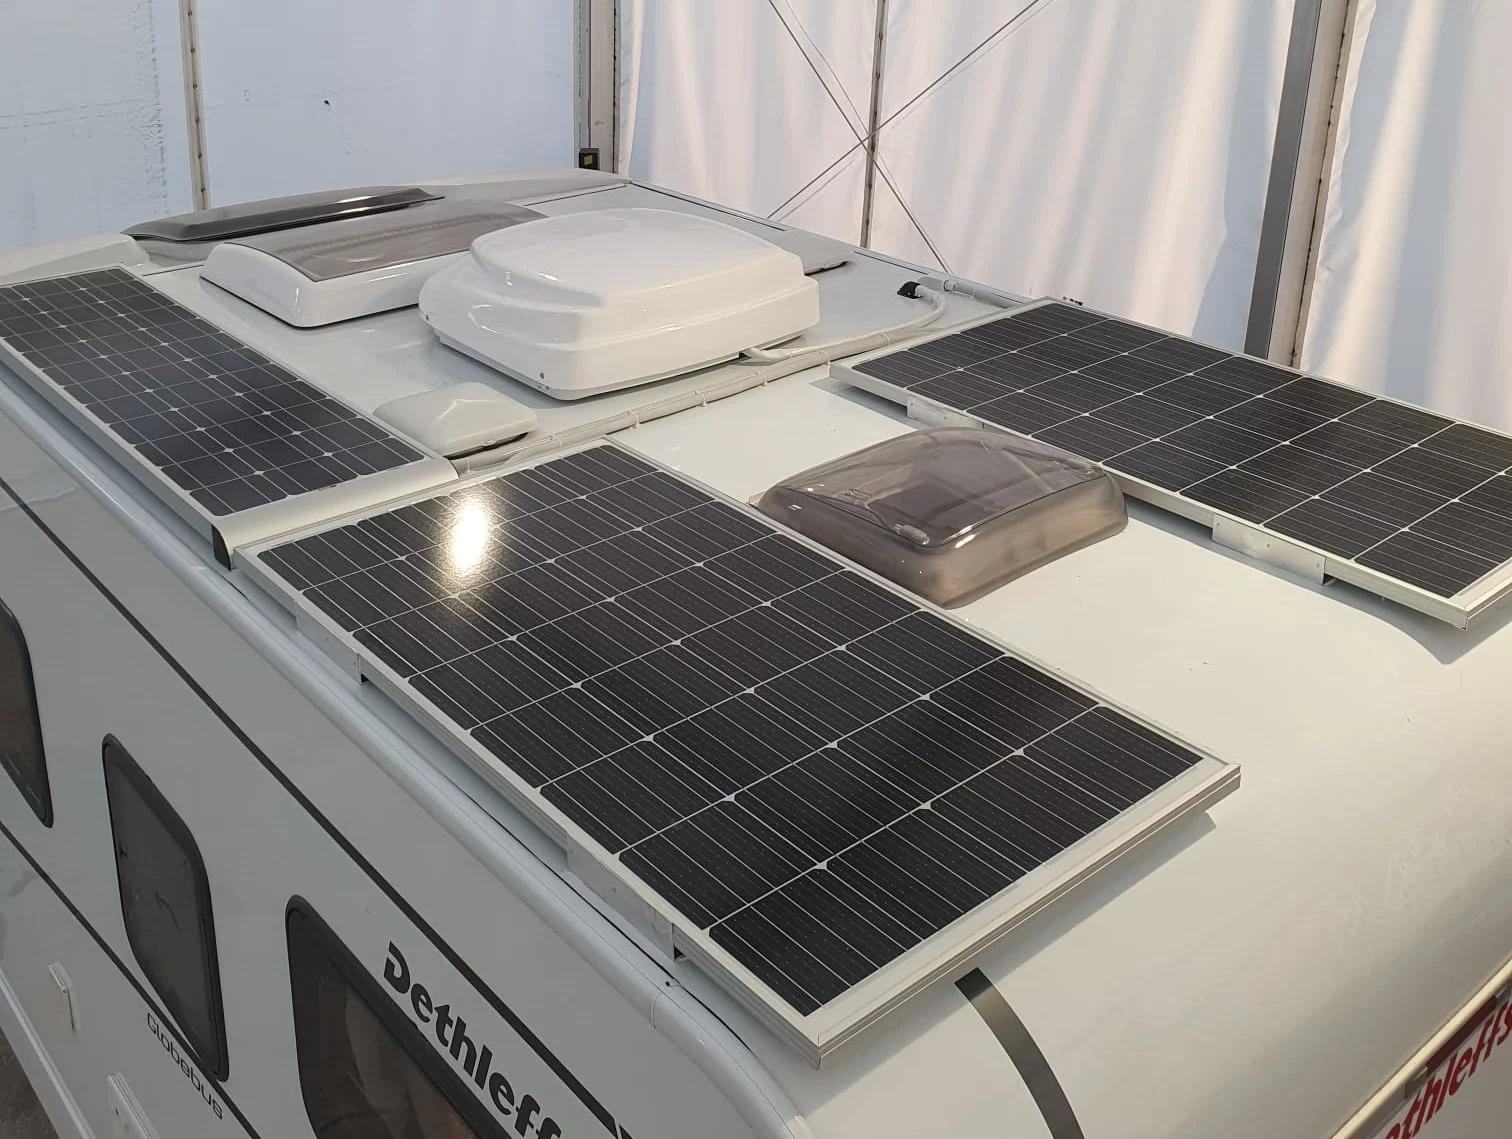 autonomia placa solar autocaravana - Qué autonomia tiene un panel solar